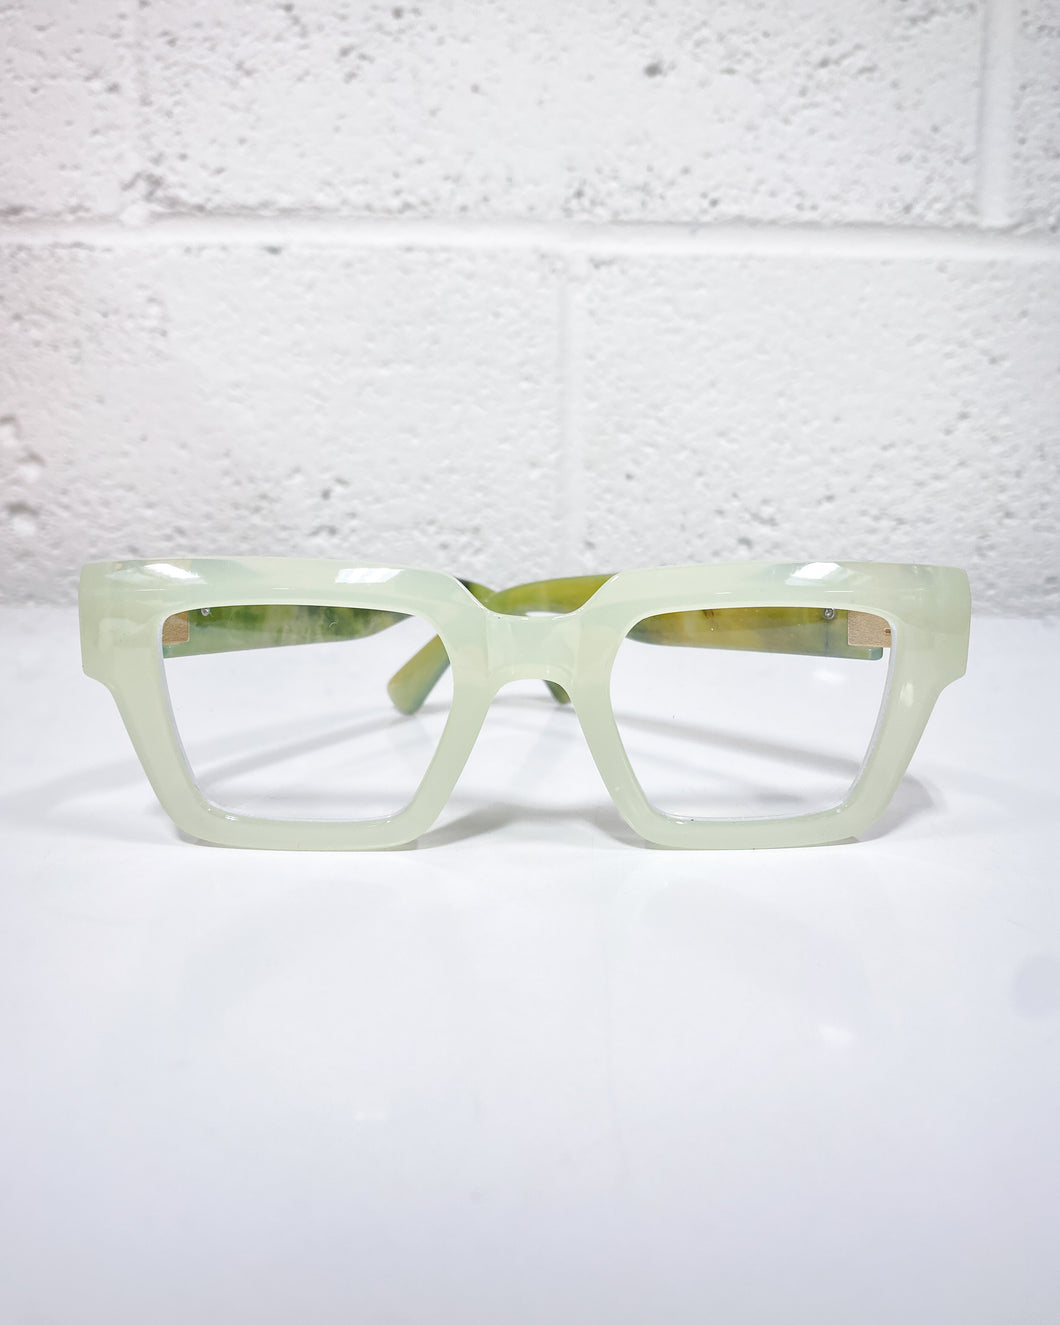 Mint Green Rectagular Glasses